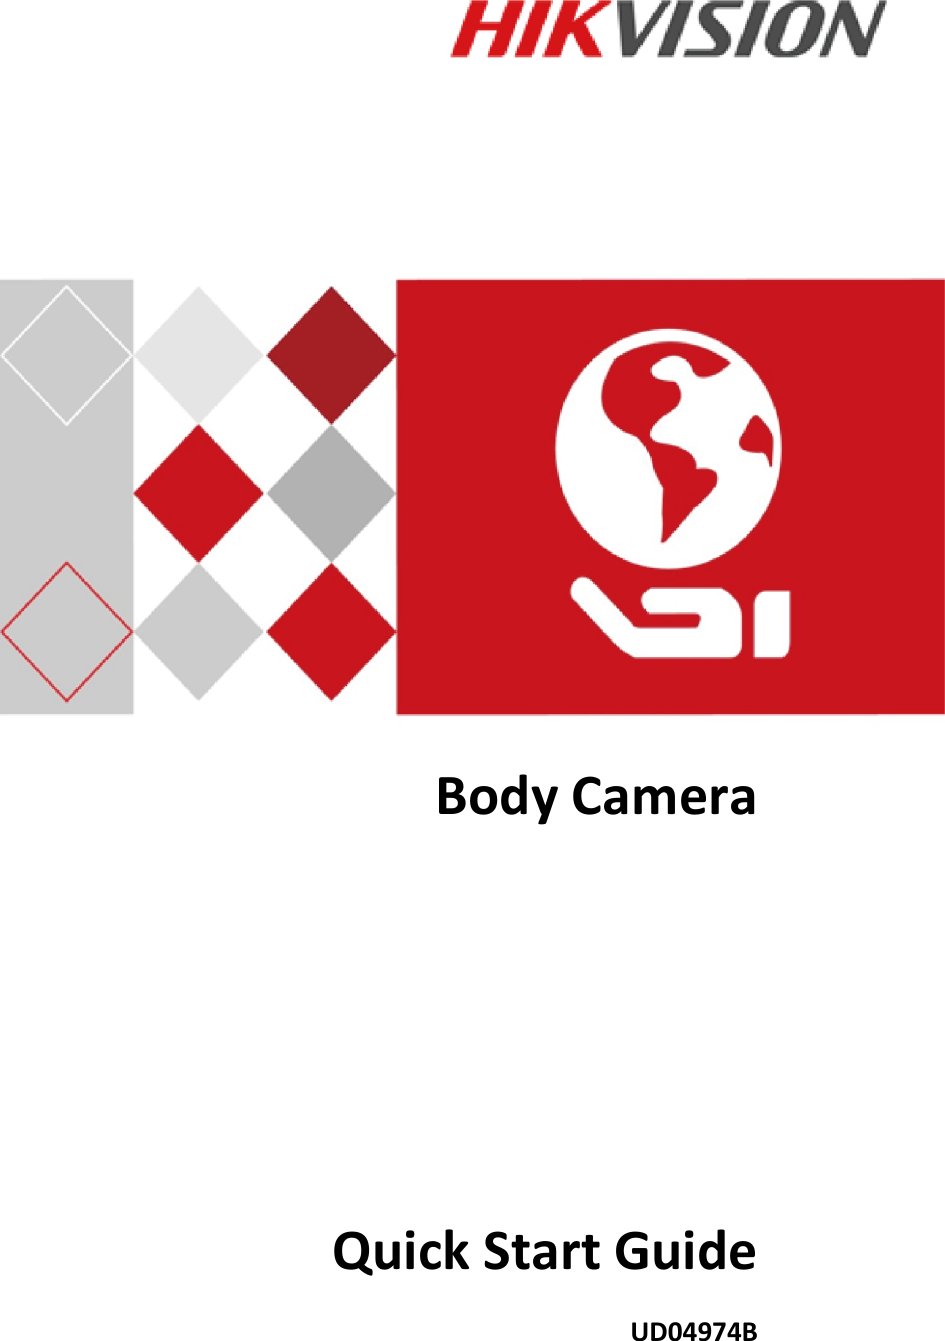                           Body Camera            Quick Start Guide UD04974B 